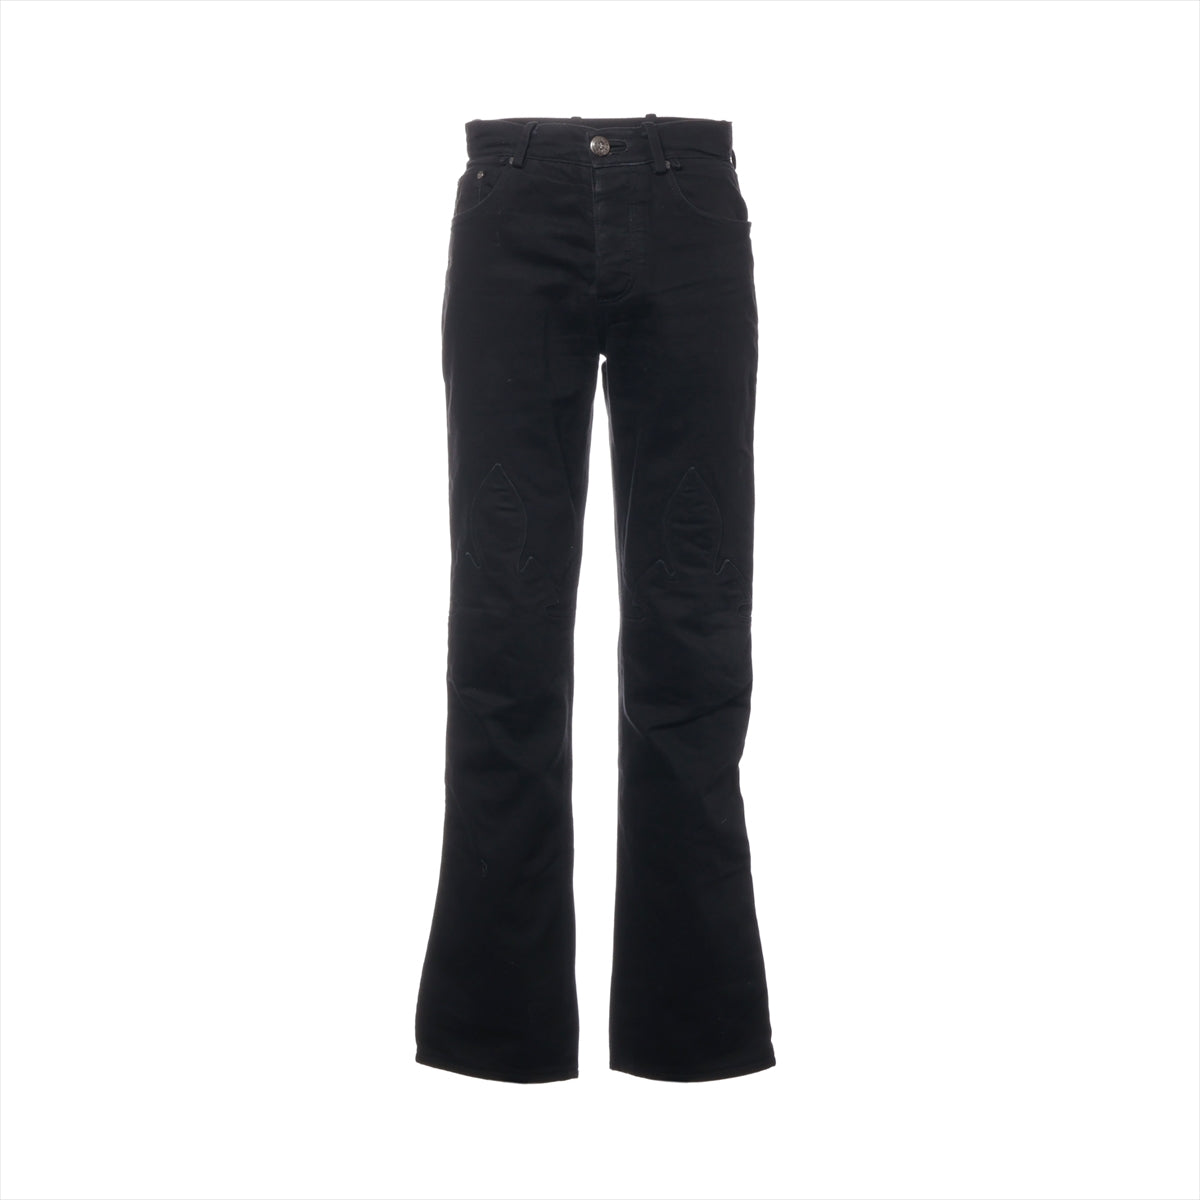 Chrome Hearts Denim pants Cotton size 30R Black Flerknee